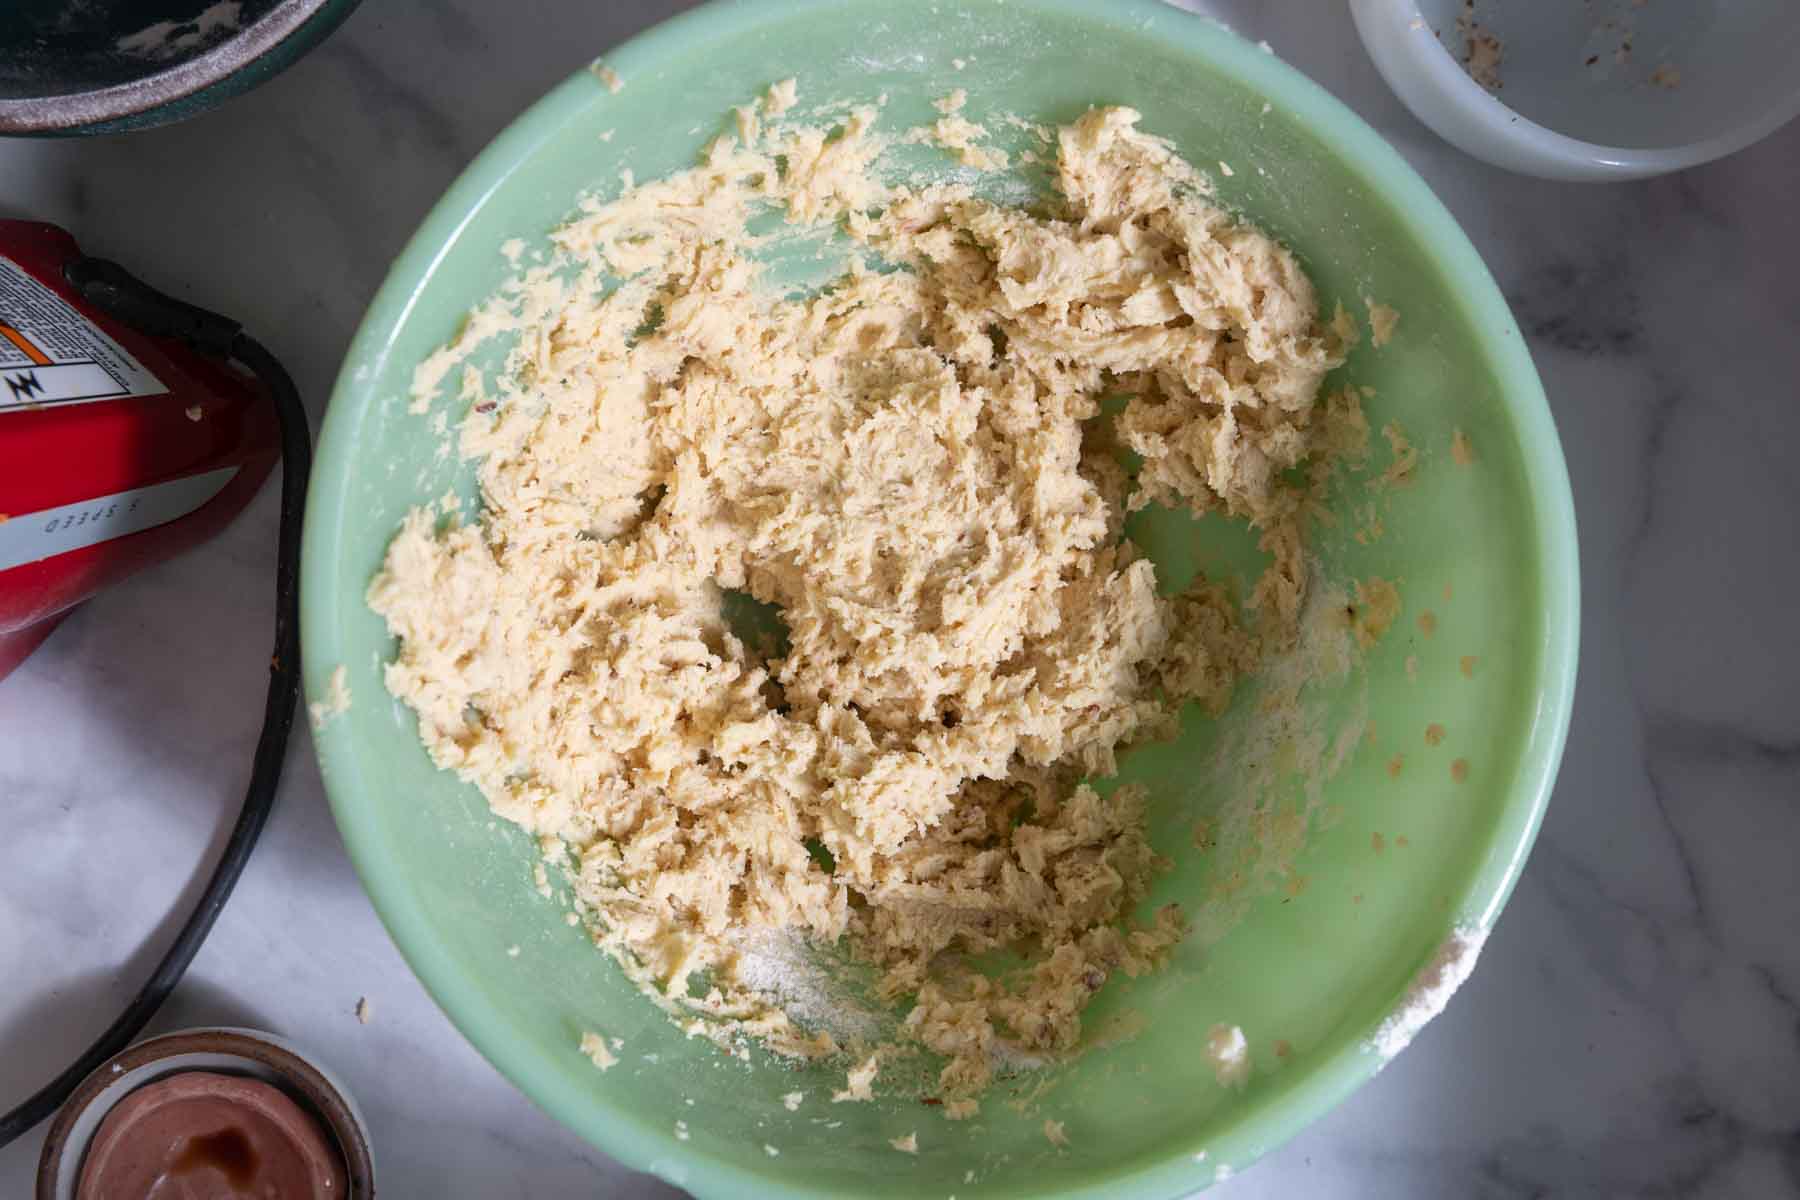 Almond cookie dough in jadeite green bowl.